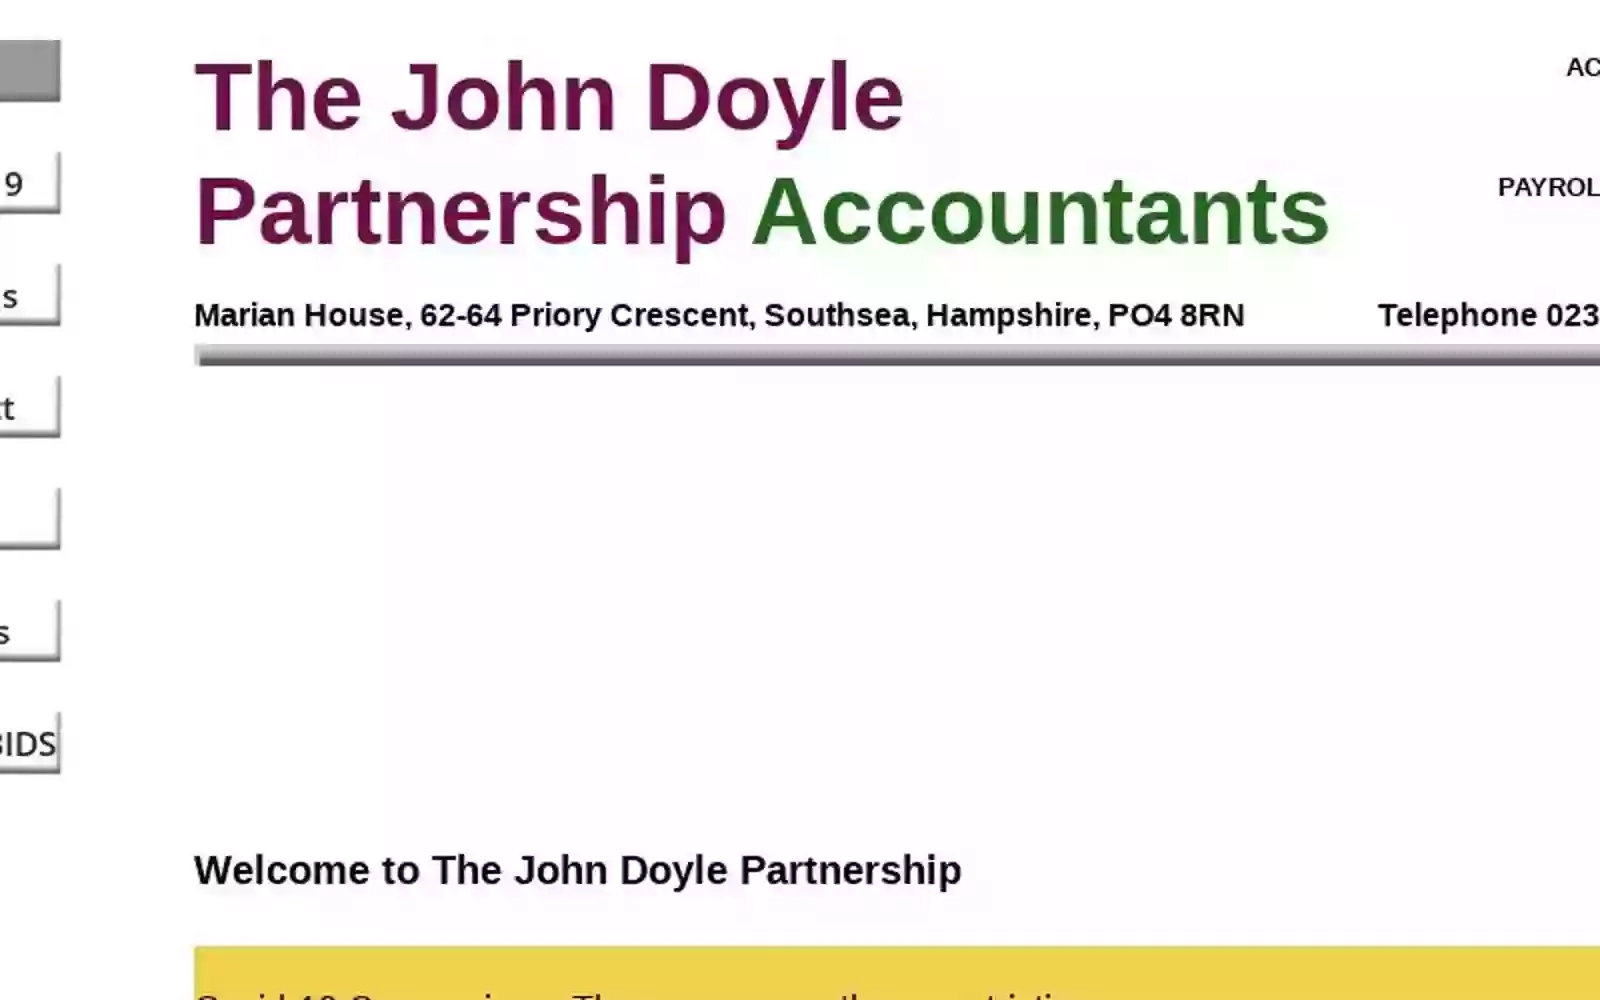 The John Doyle Partnership